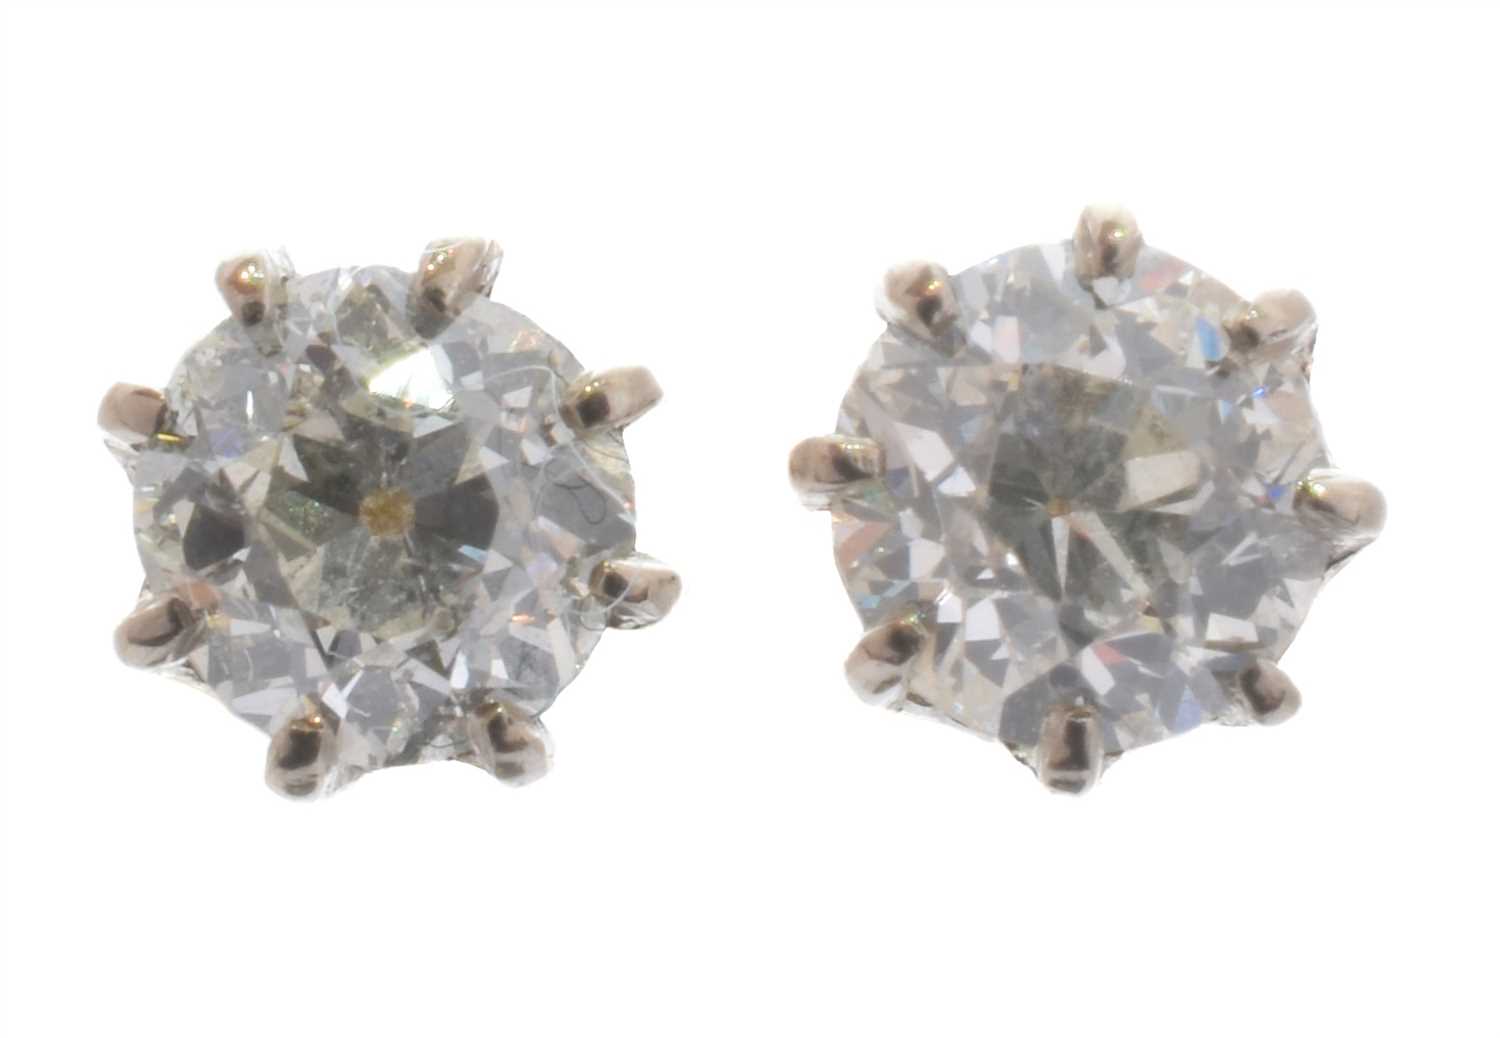 Lot 106 - A pair of old cut diamond stud earrings